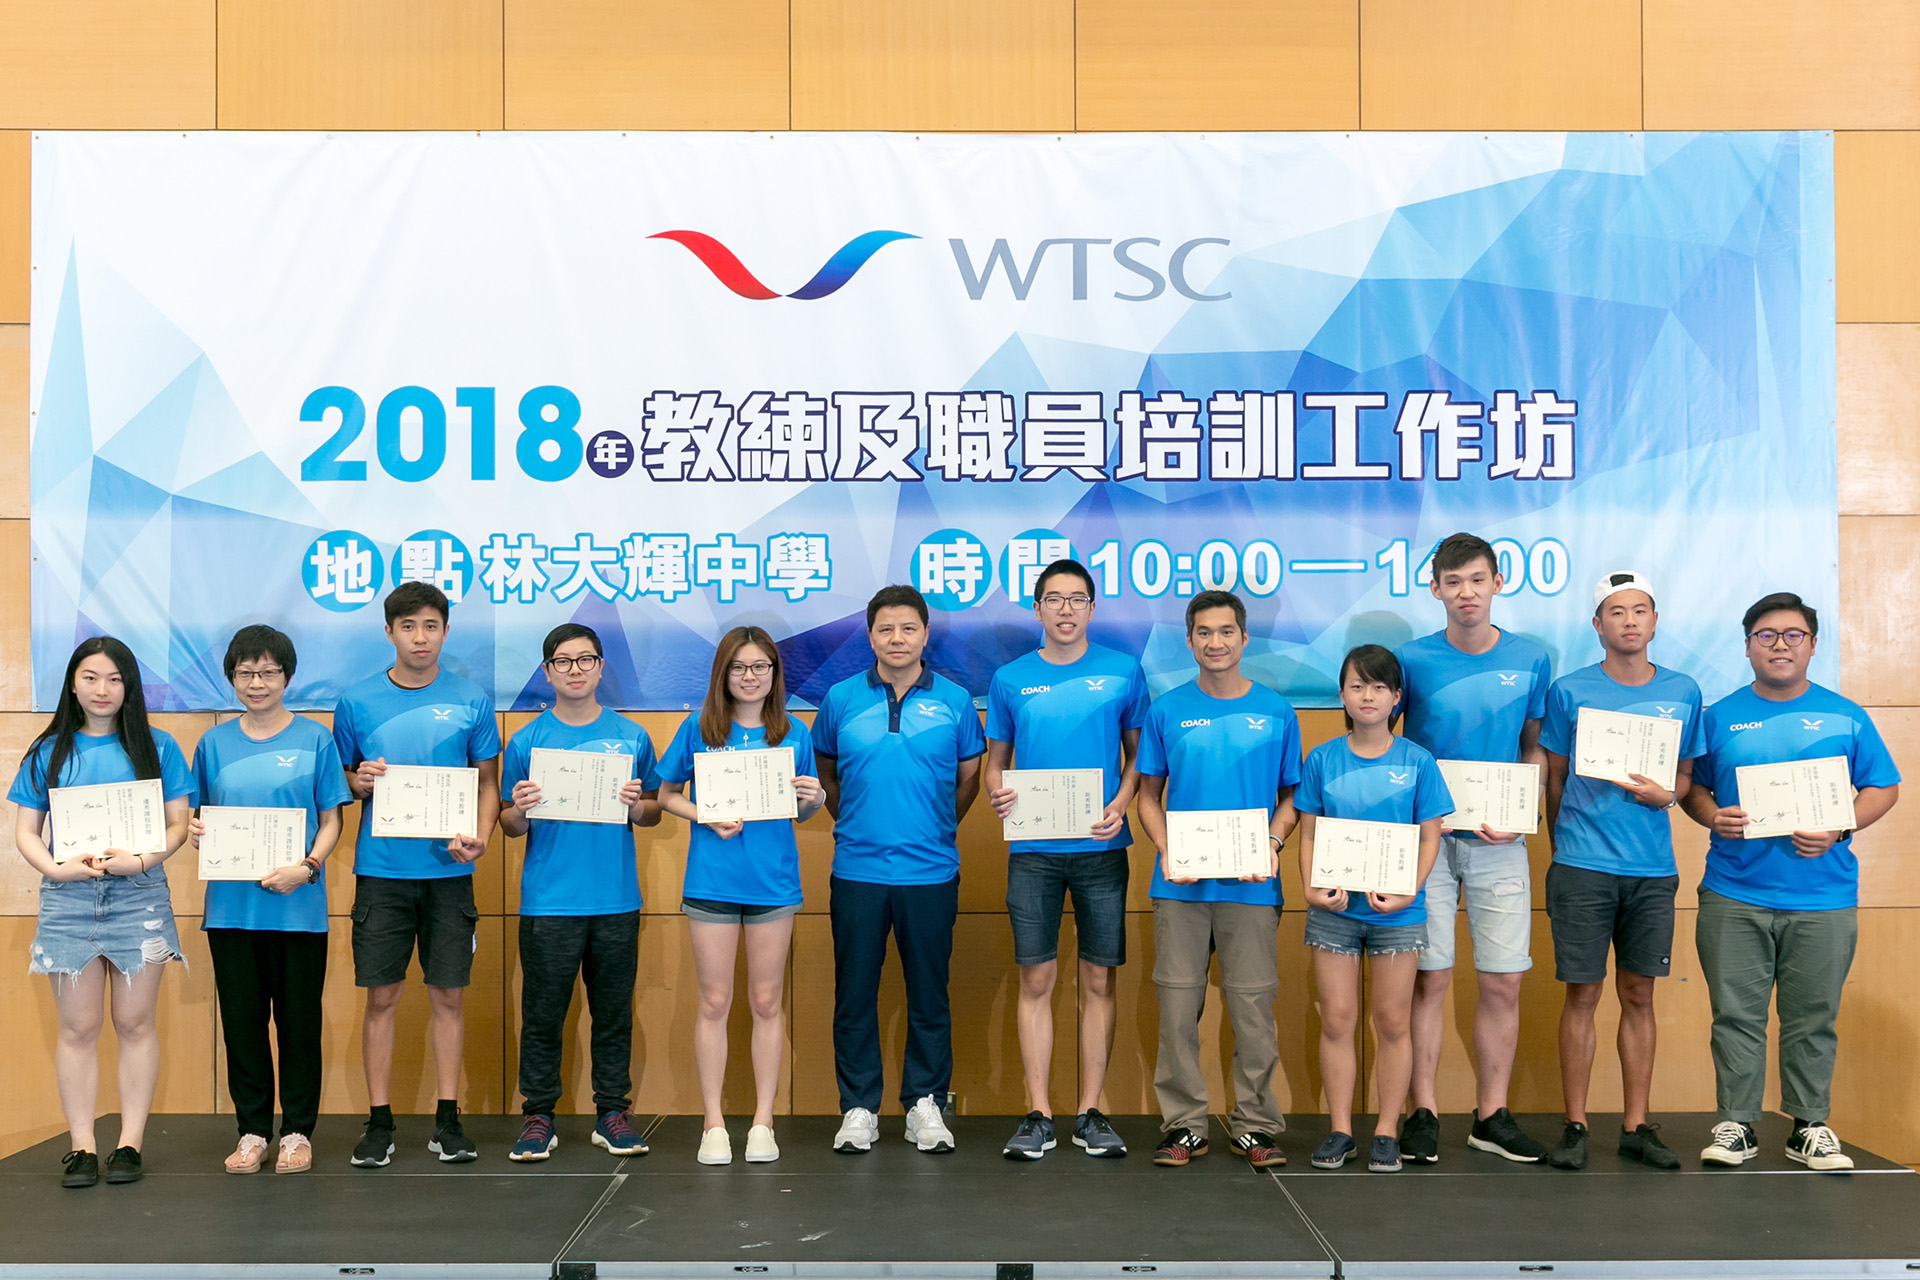 WTSC 2018 Training Day 7